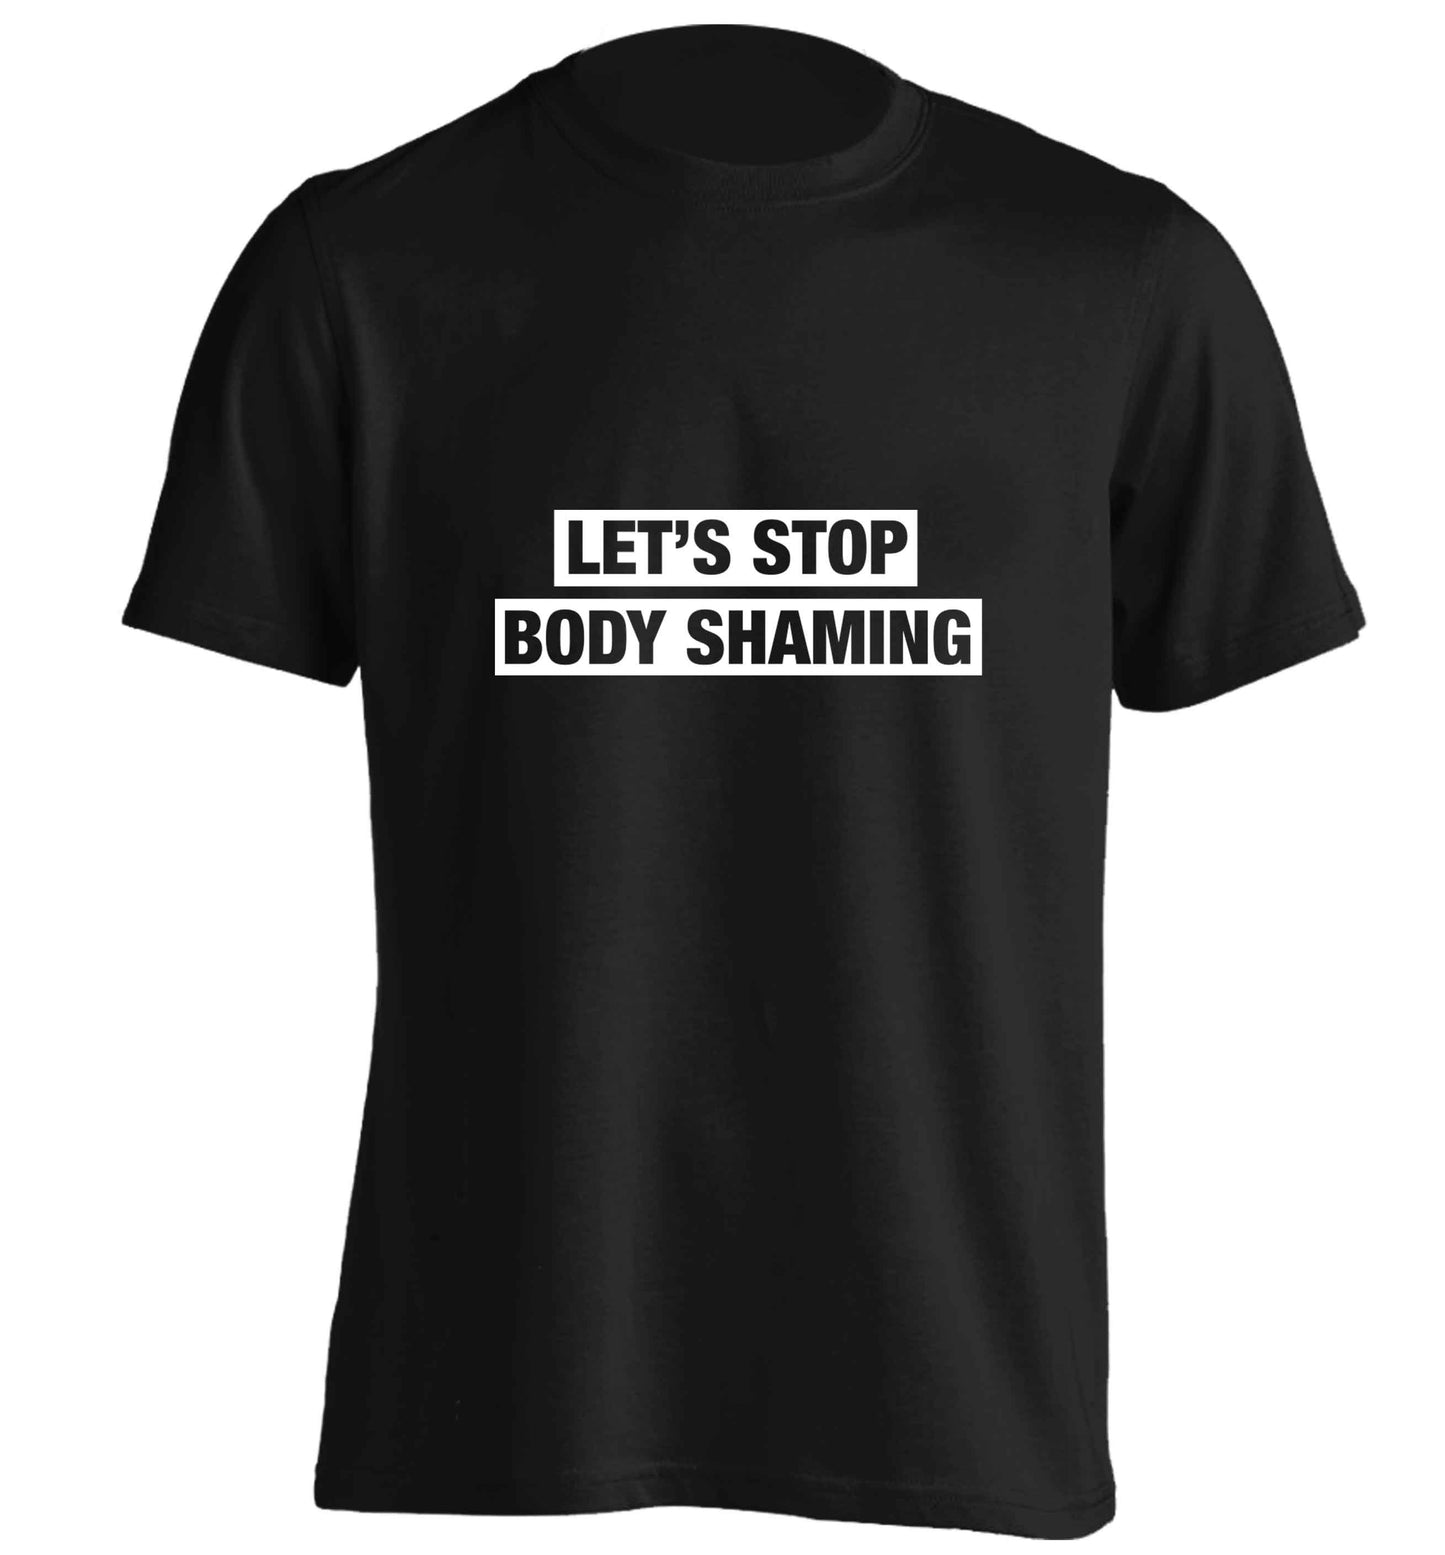 Let's stop body shaming adults unisex black Tshirt 2XL